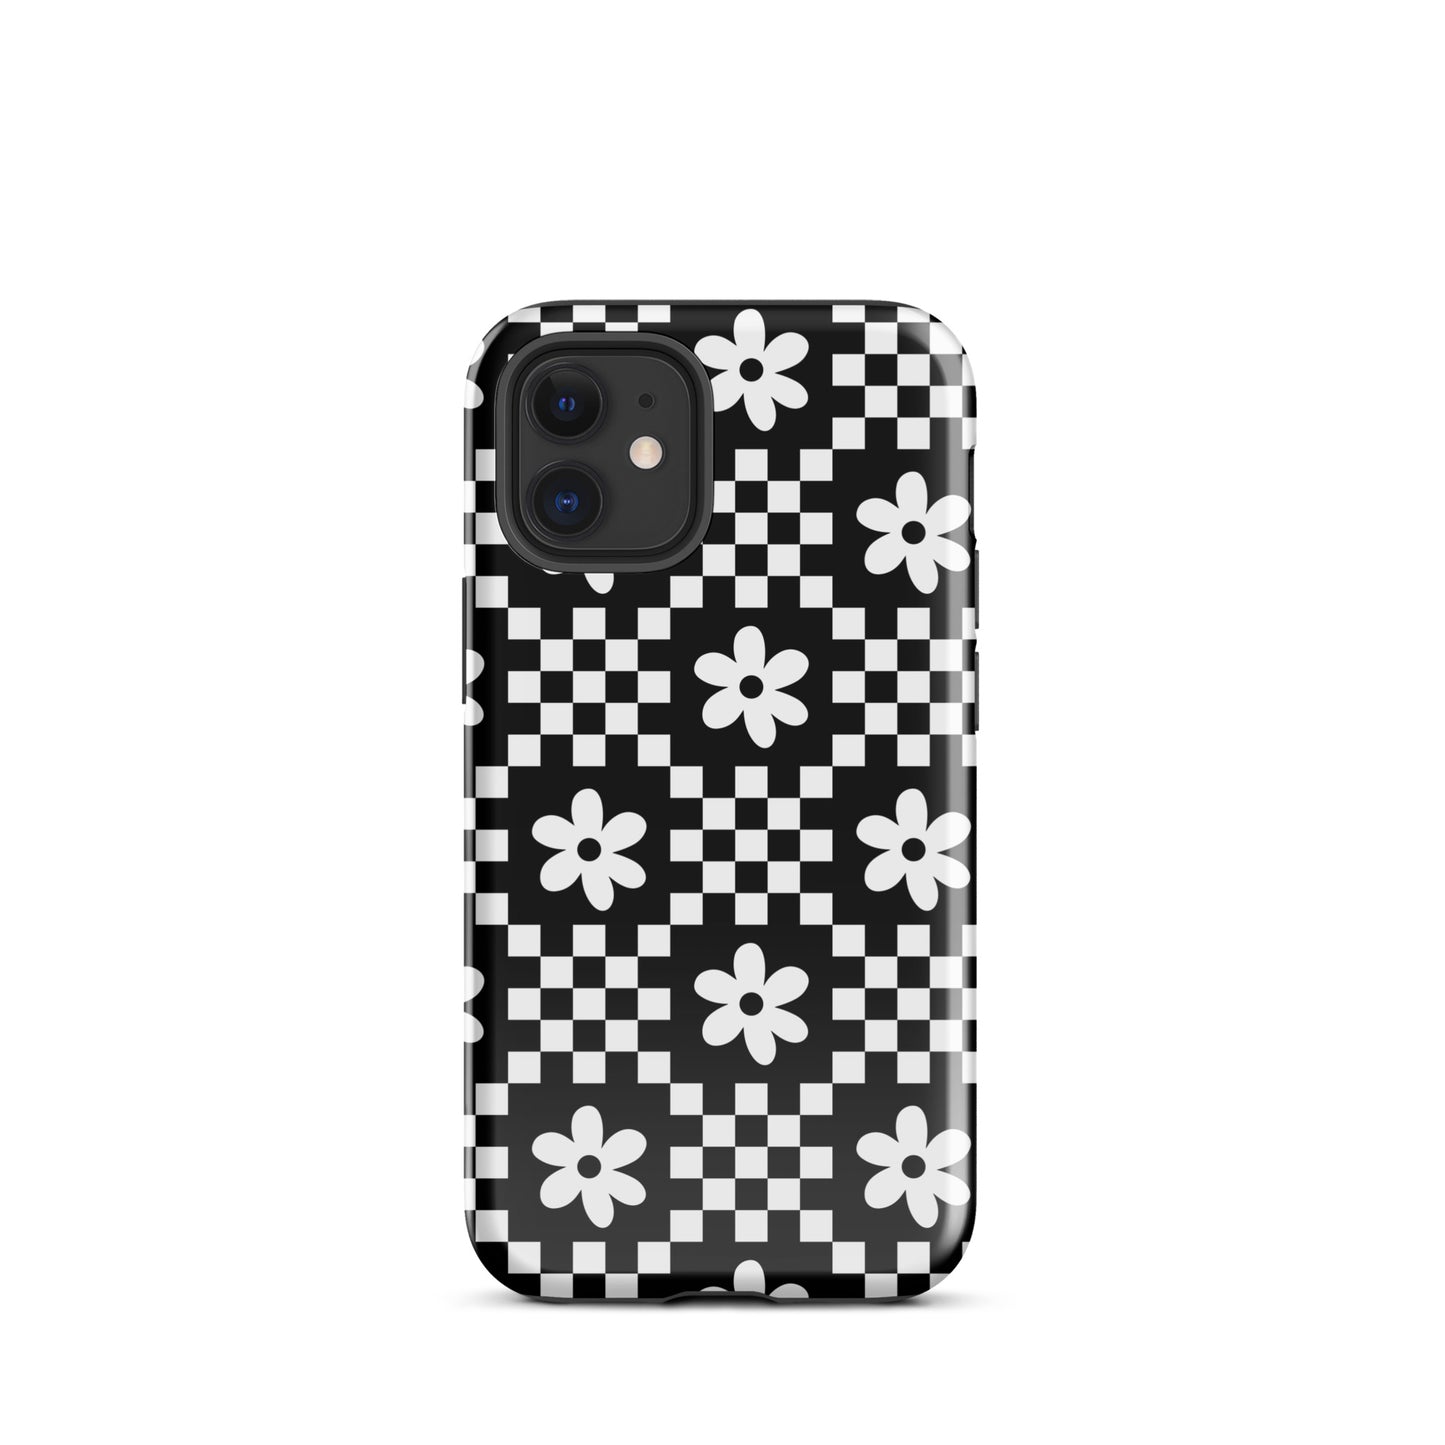 Checkerboard Daisy iPhone Case iPhone 12 mini Glossy